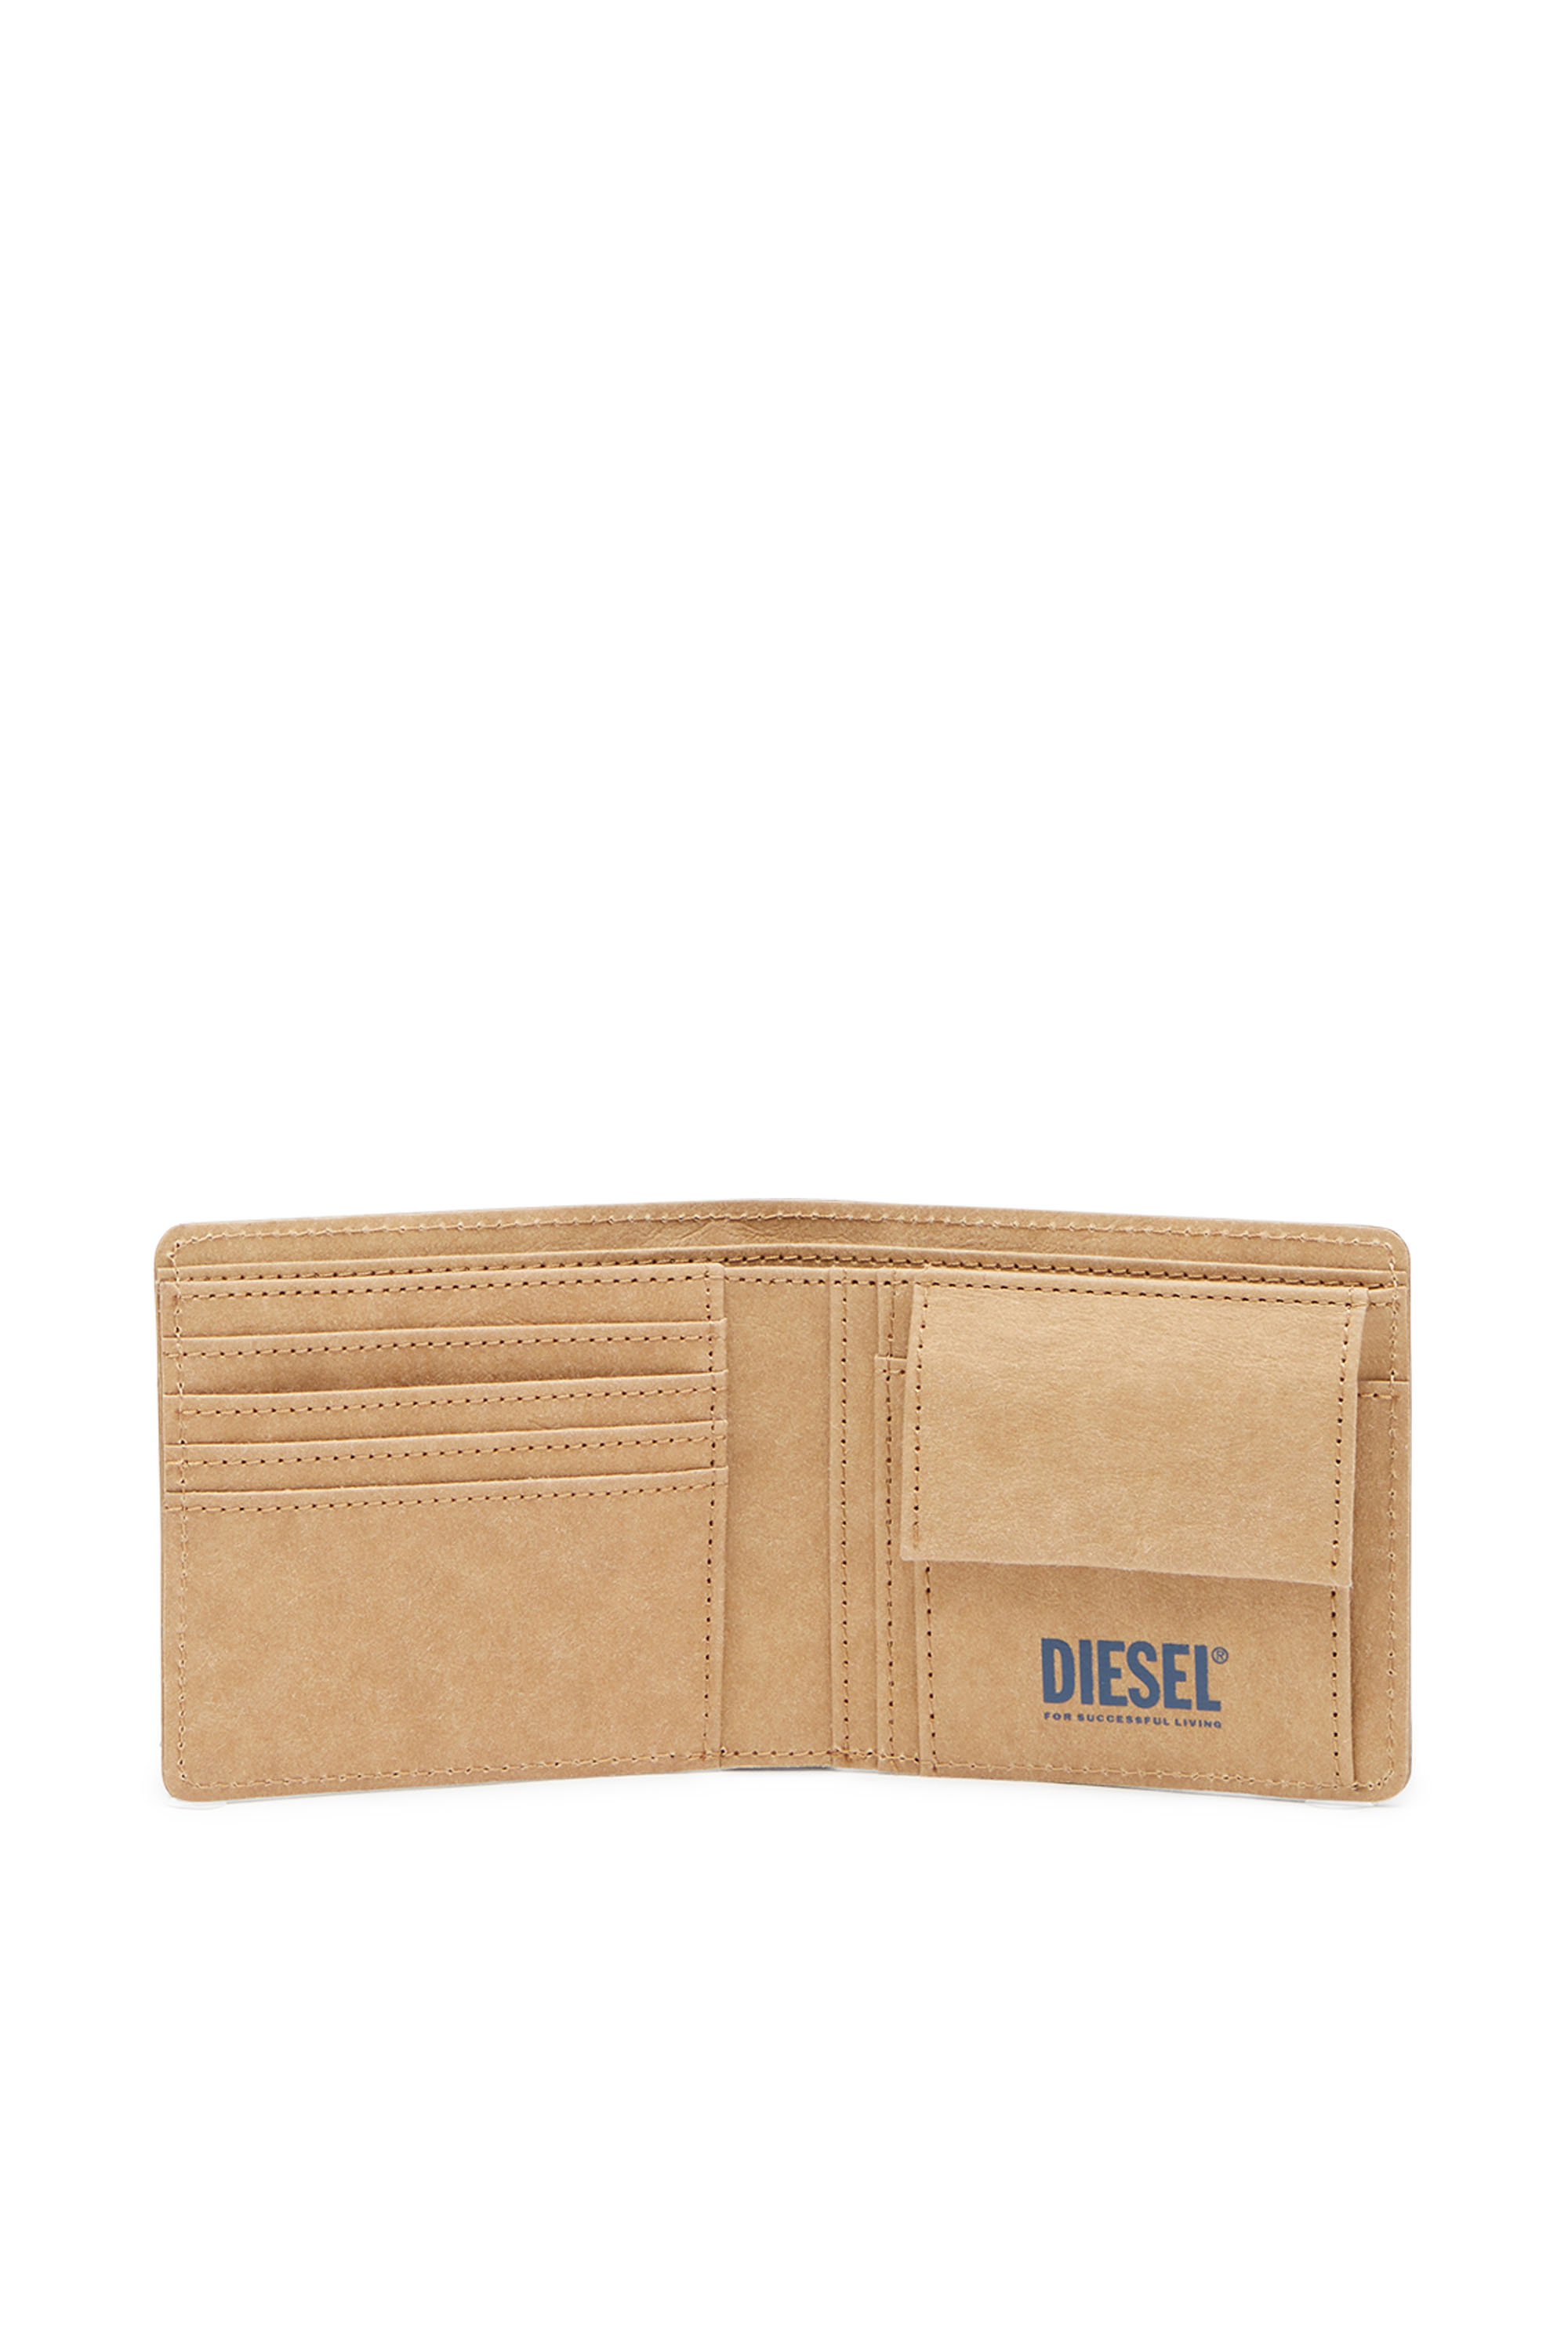 Diesel - BI-FOLD COIN S, Beige/Blu - Image 3